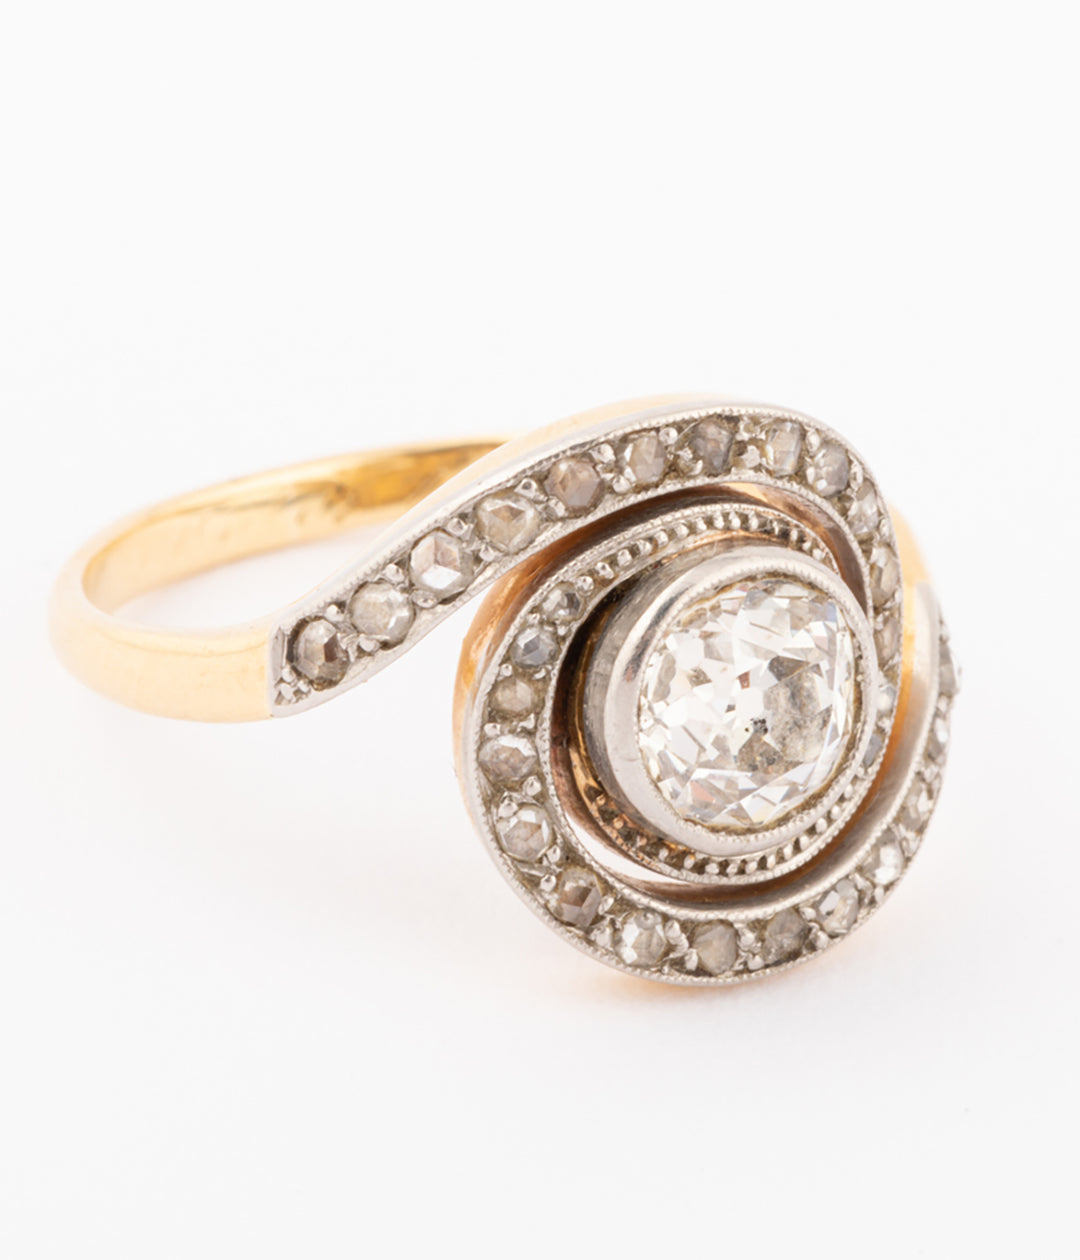 antique gold and diamond engagement ring Gezan - Caillou Paris